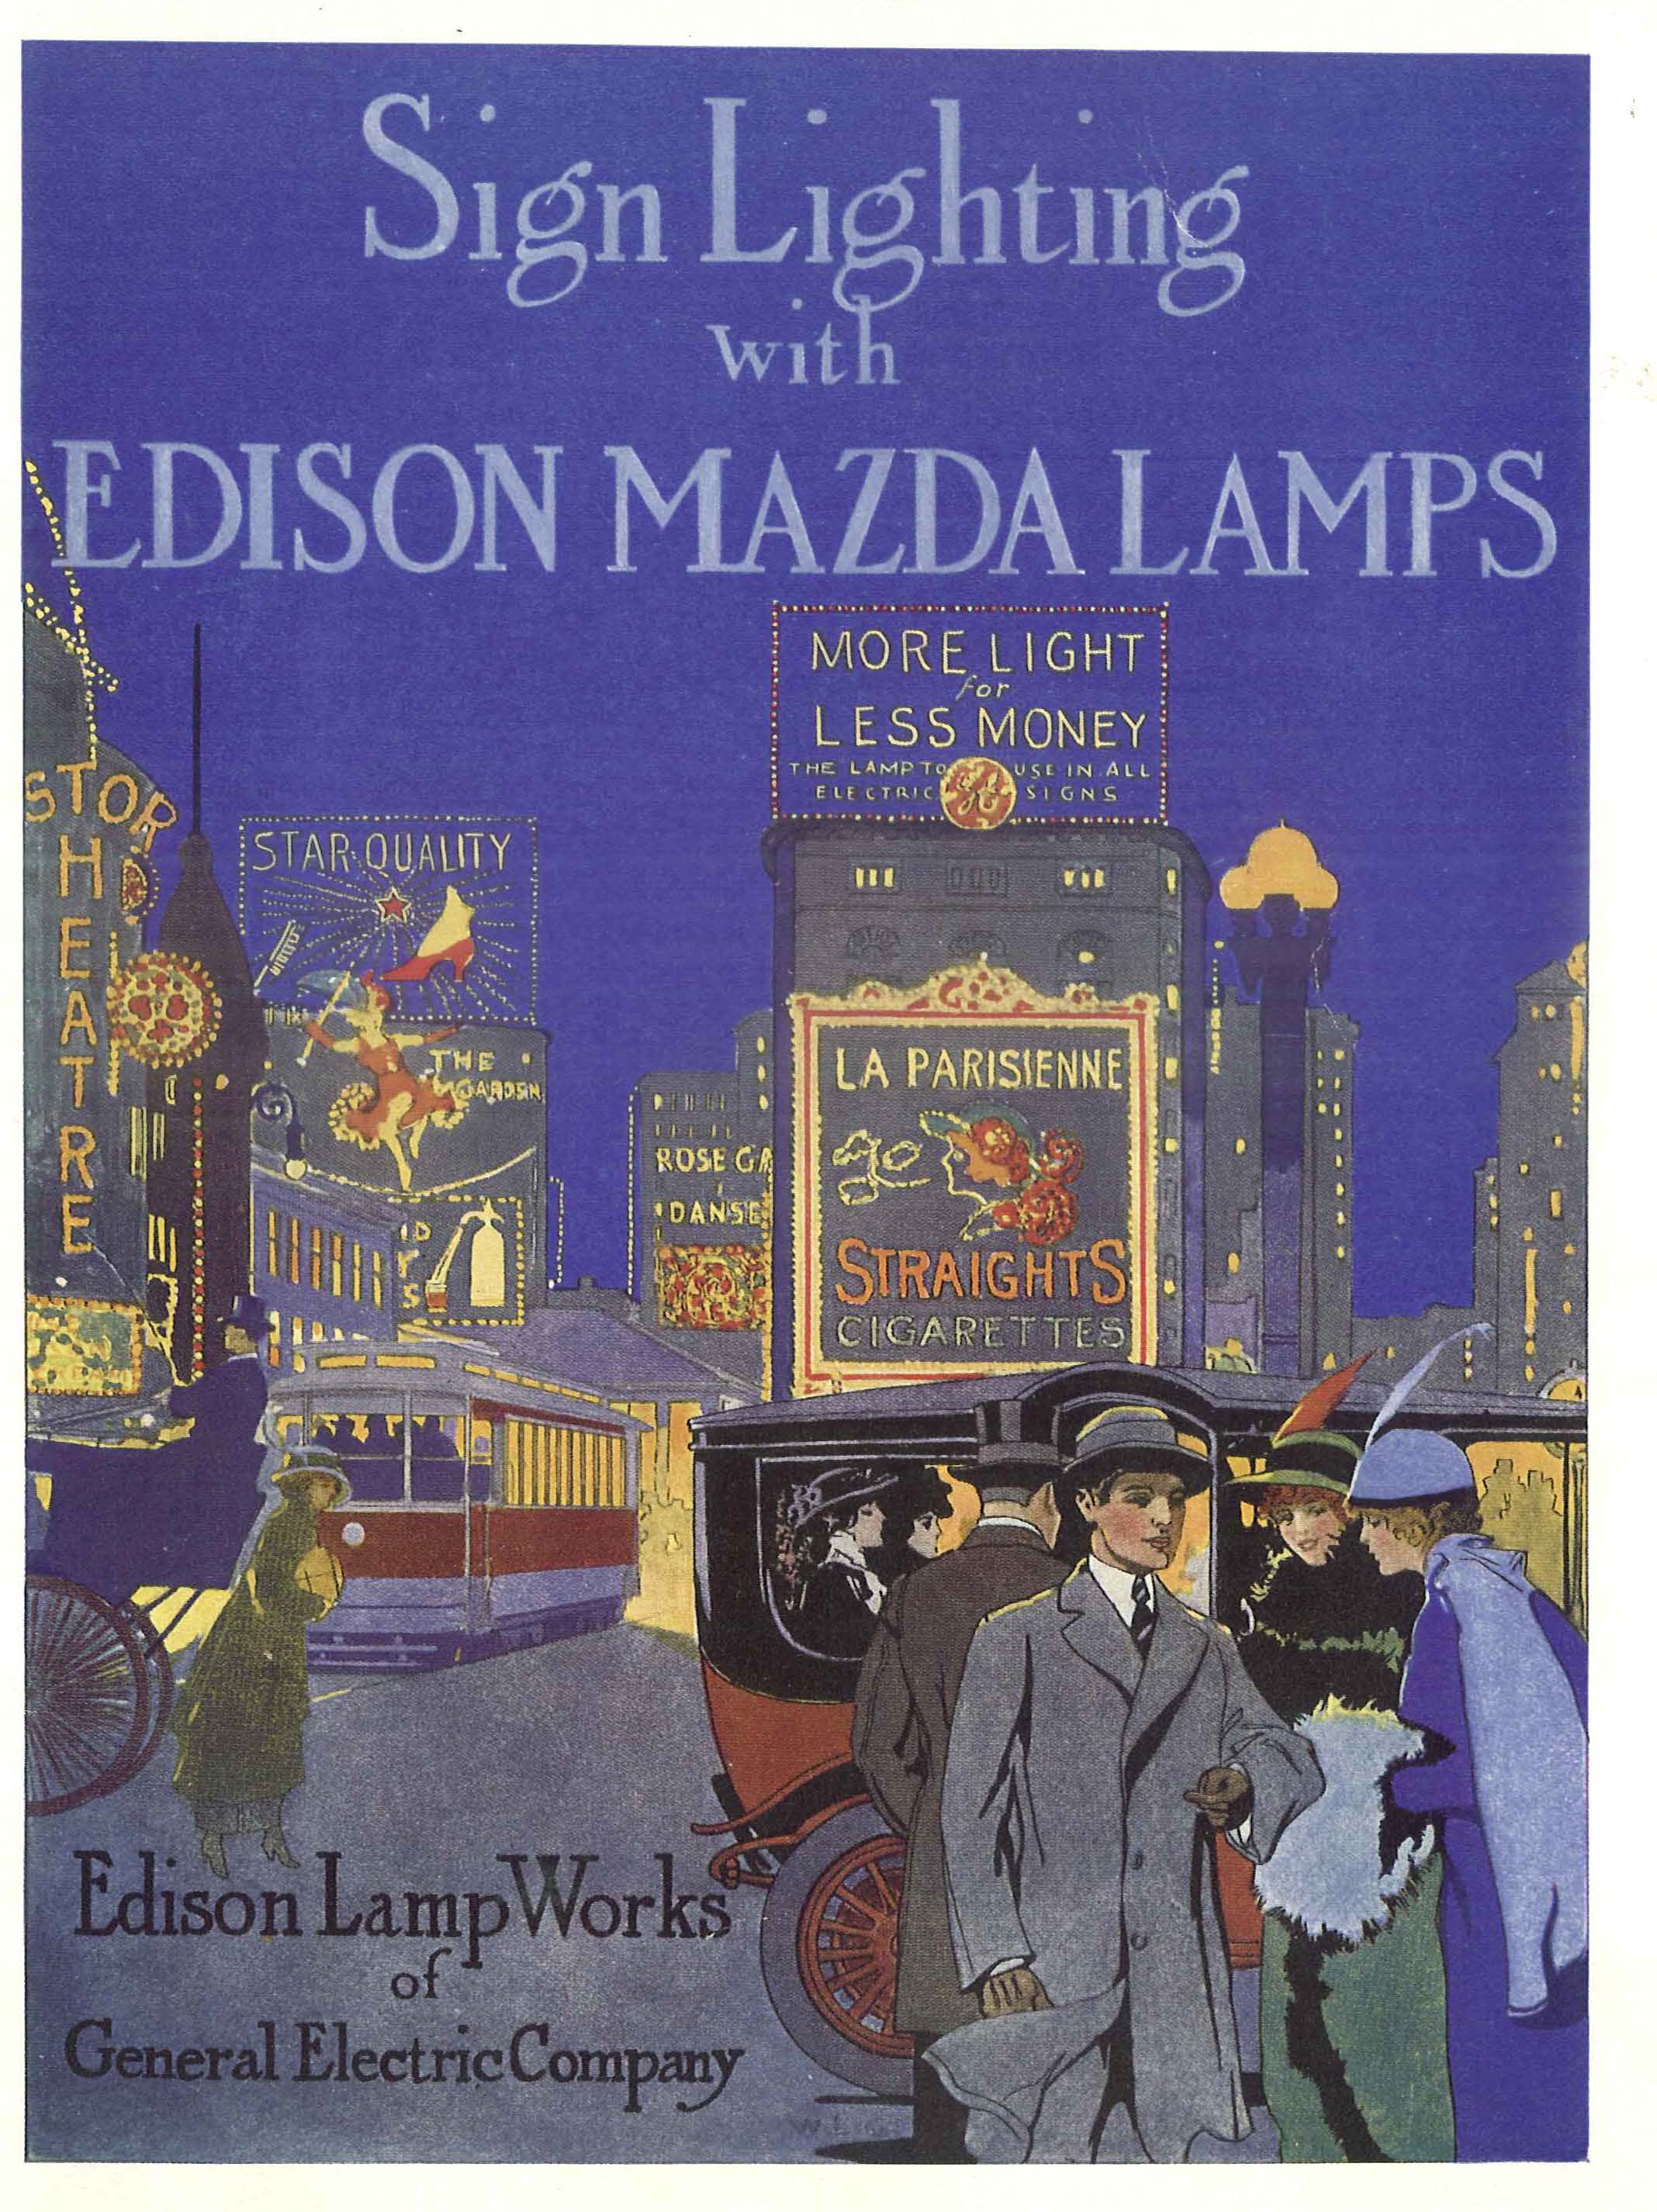 Advertisement for Edison Mazda Lamps